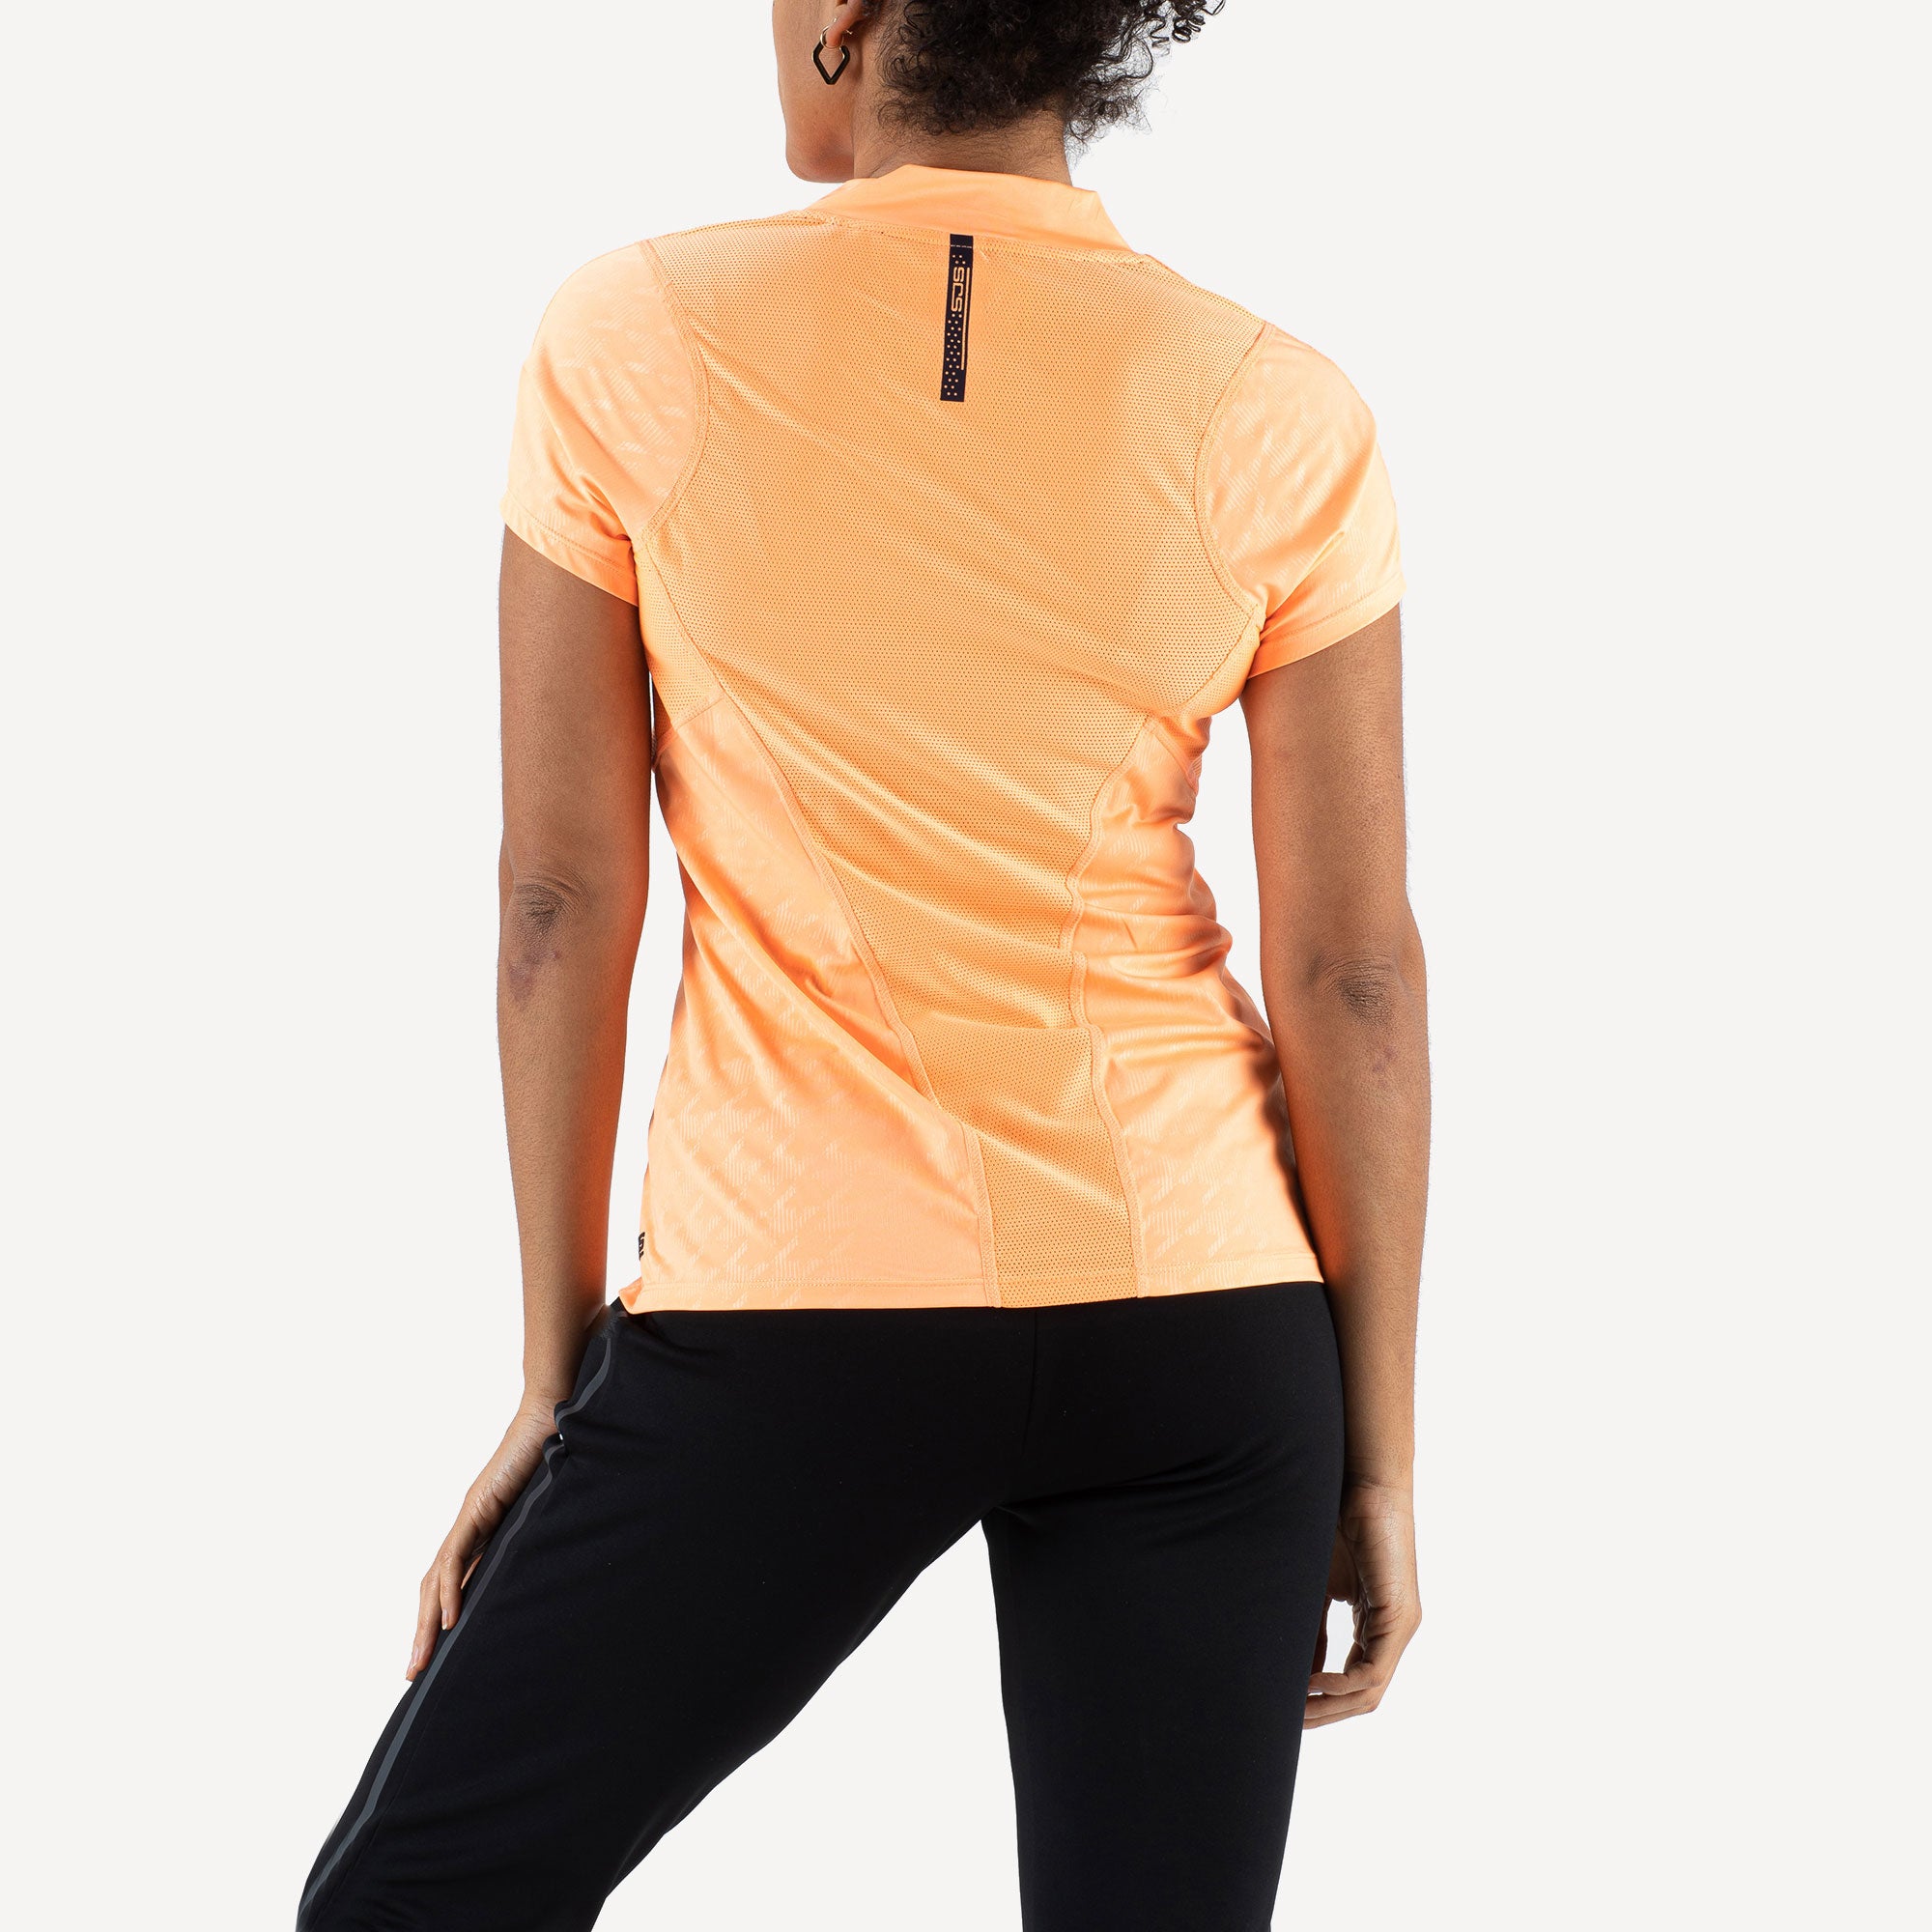 Sjeng Sports Hertz Women's Tennis Shirt Orange (2)